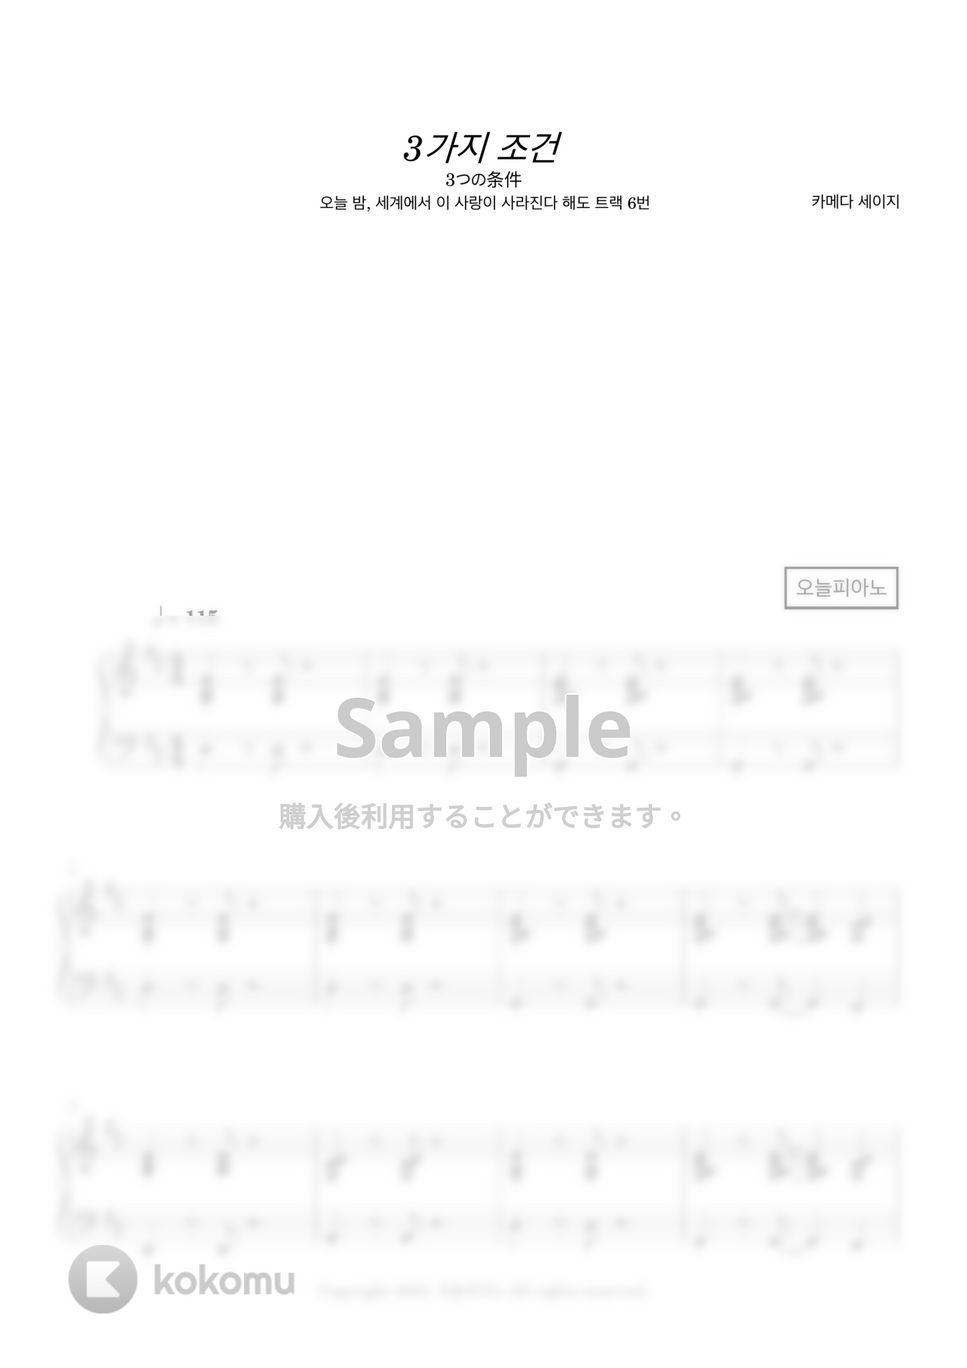 Seiji Kameda - 3つの条件 (今夜、世界からこの恋が消えても track 6) by 今日ピアノ(Oneul Piano)